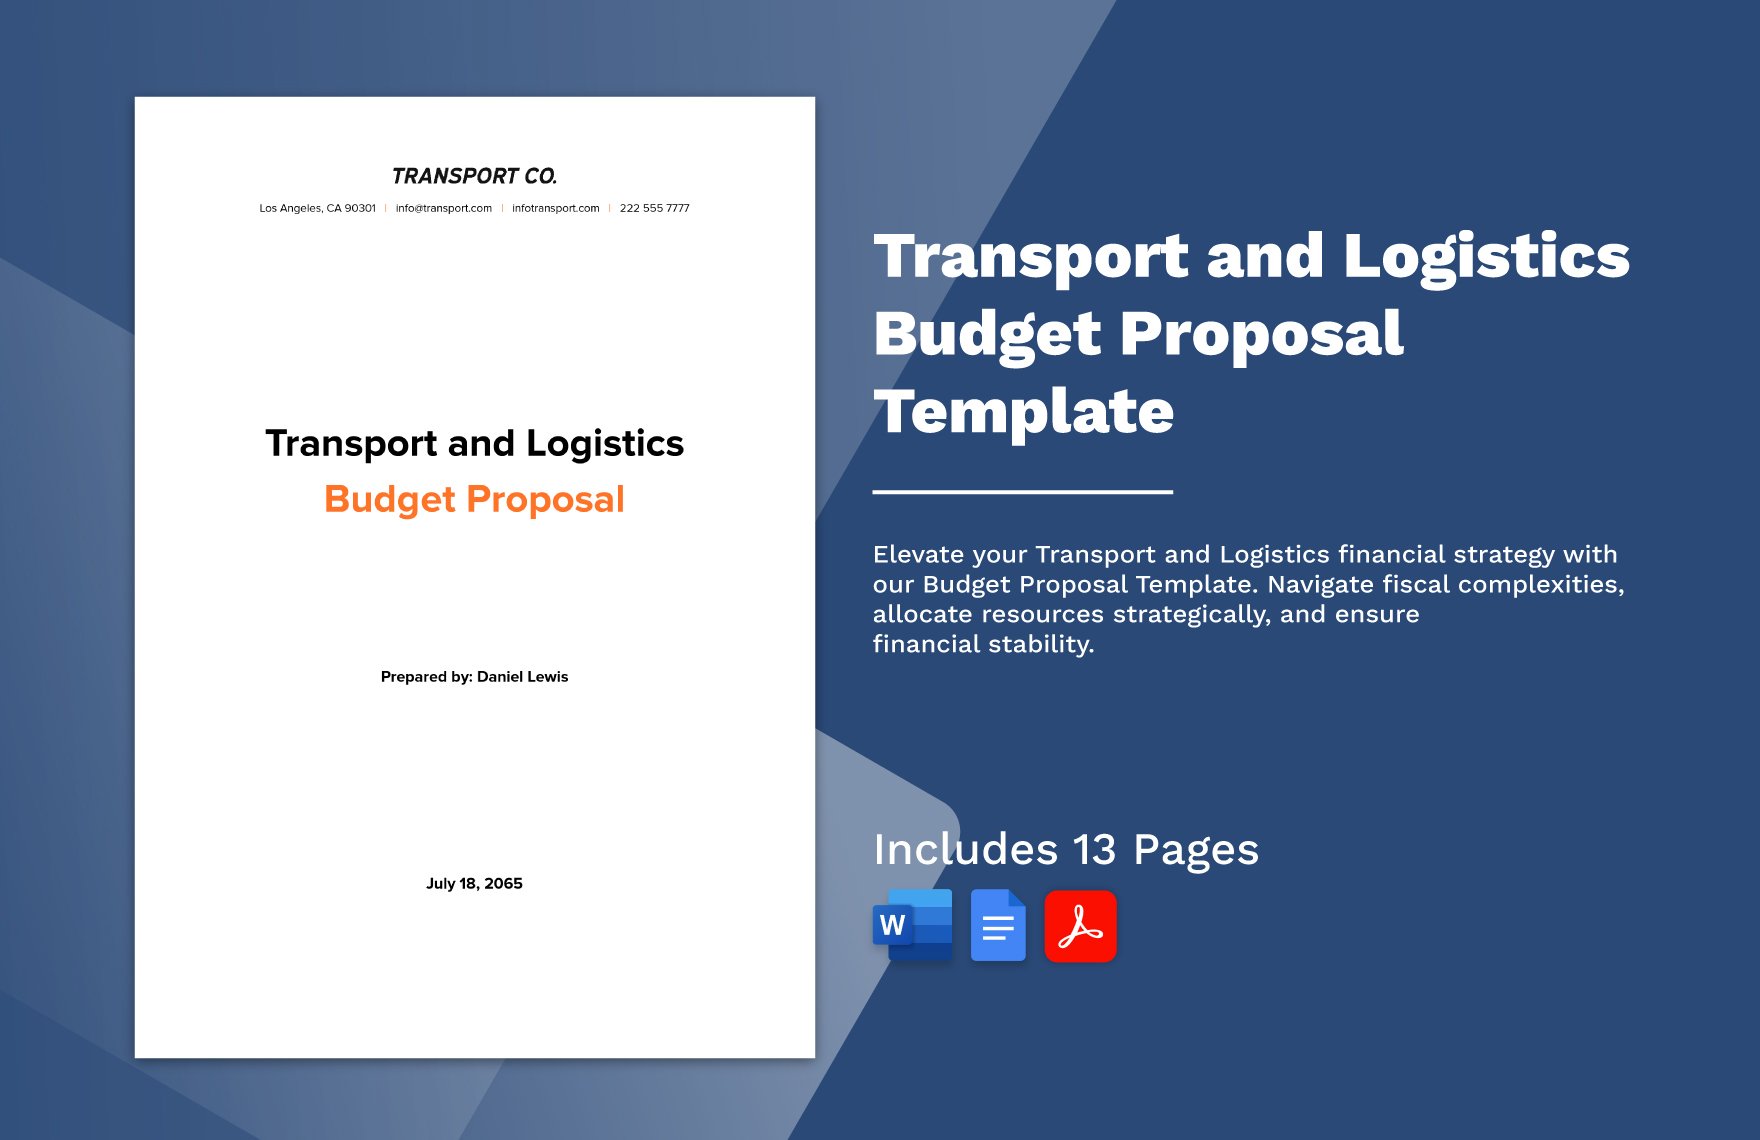 Transport and Logistics Budget Proposal Template